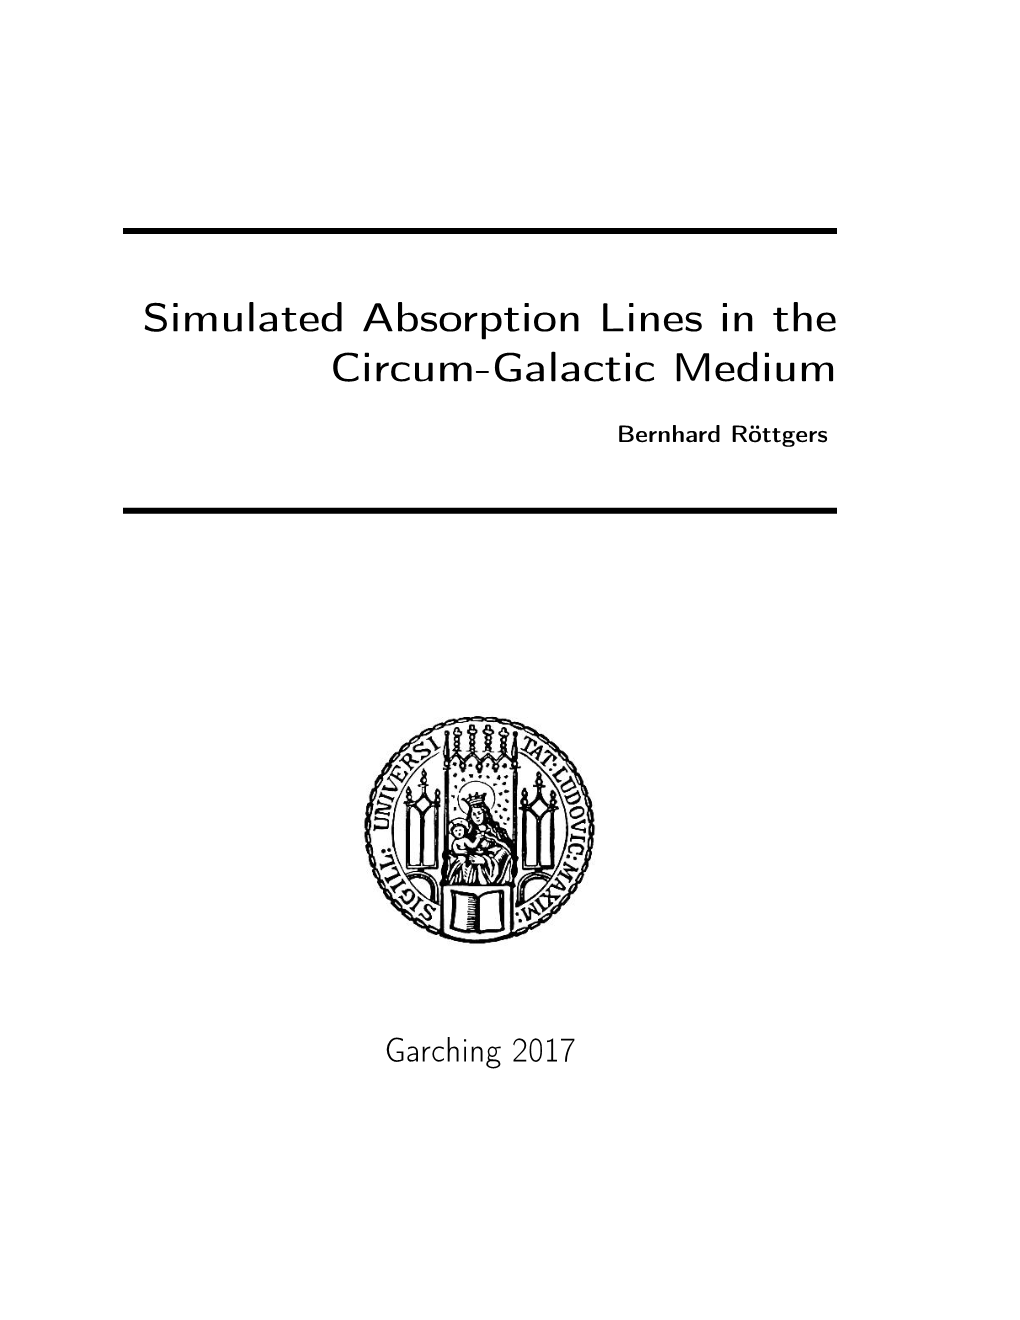 Simulated Absorption Lines in the Circum-Galactic Medium